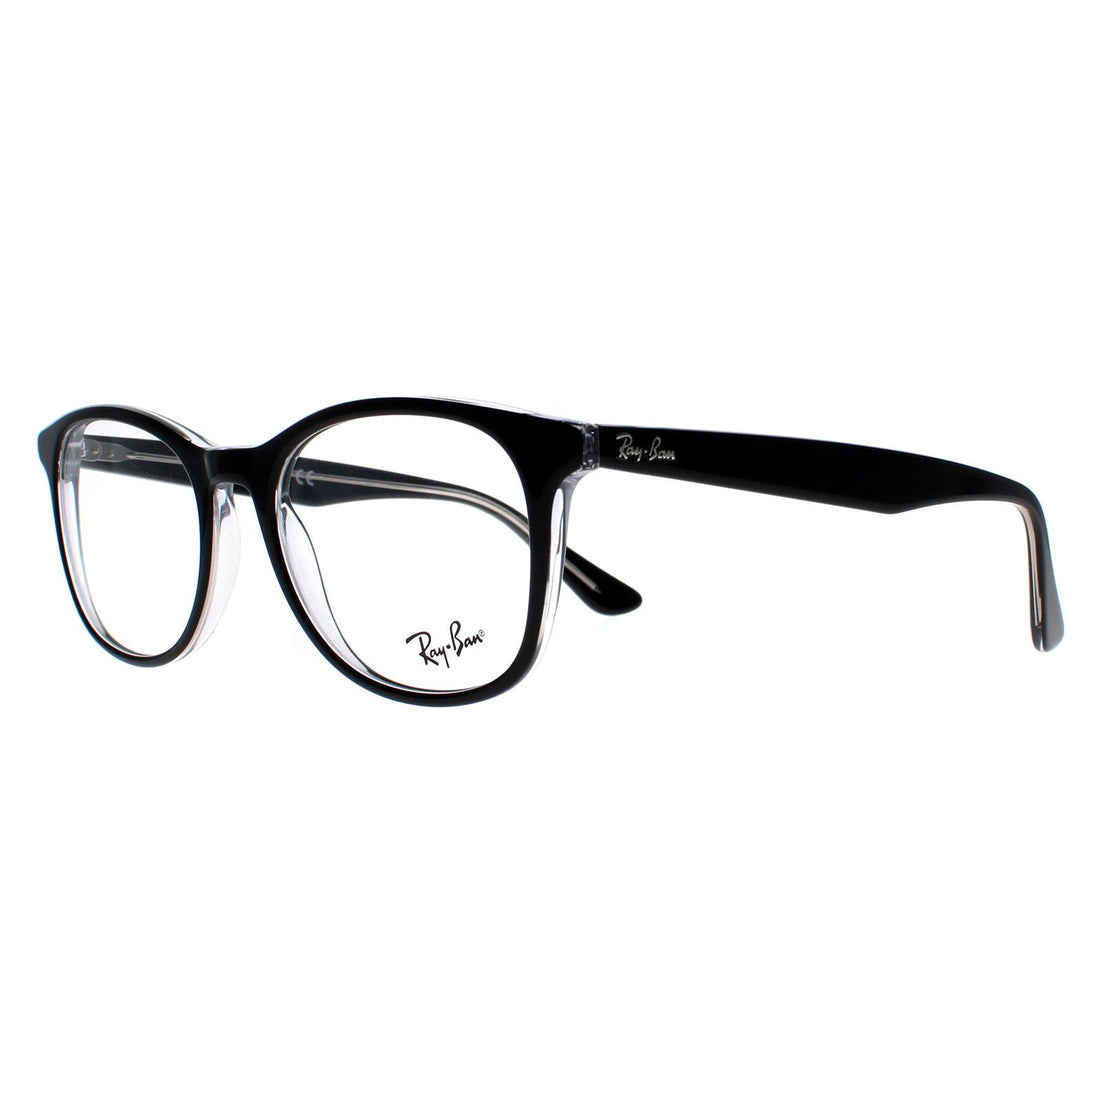 Ray-Ban 5356 Glasses Frames